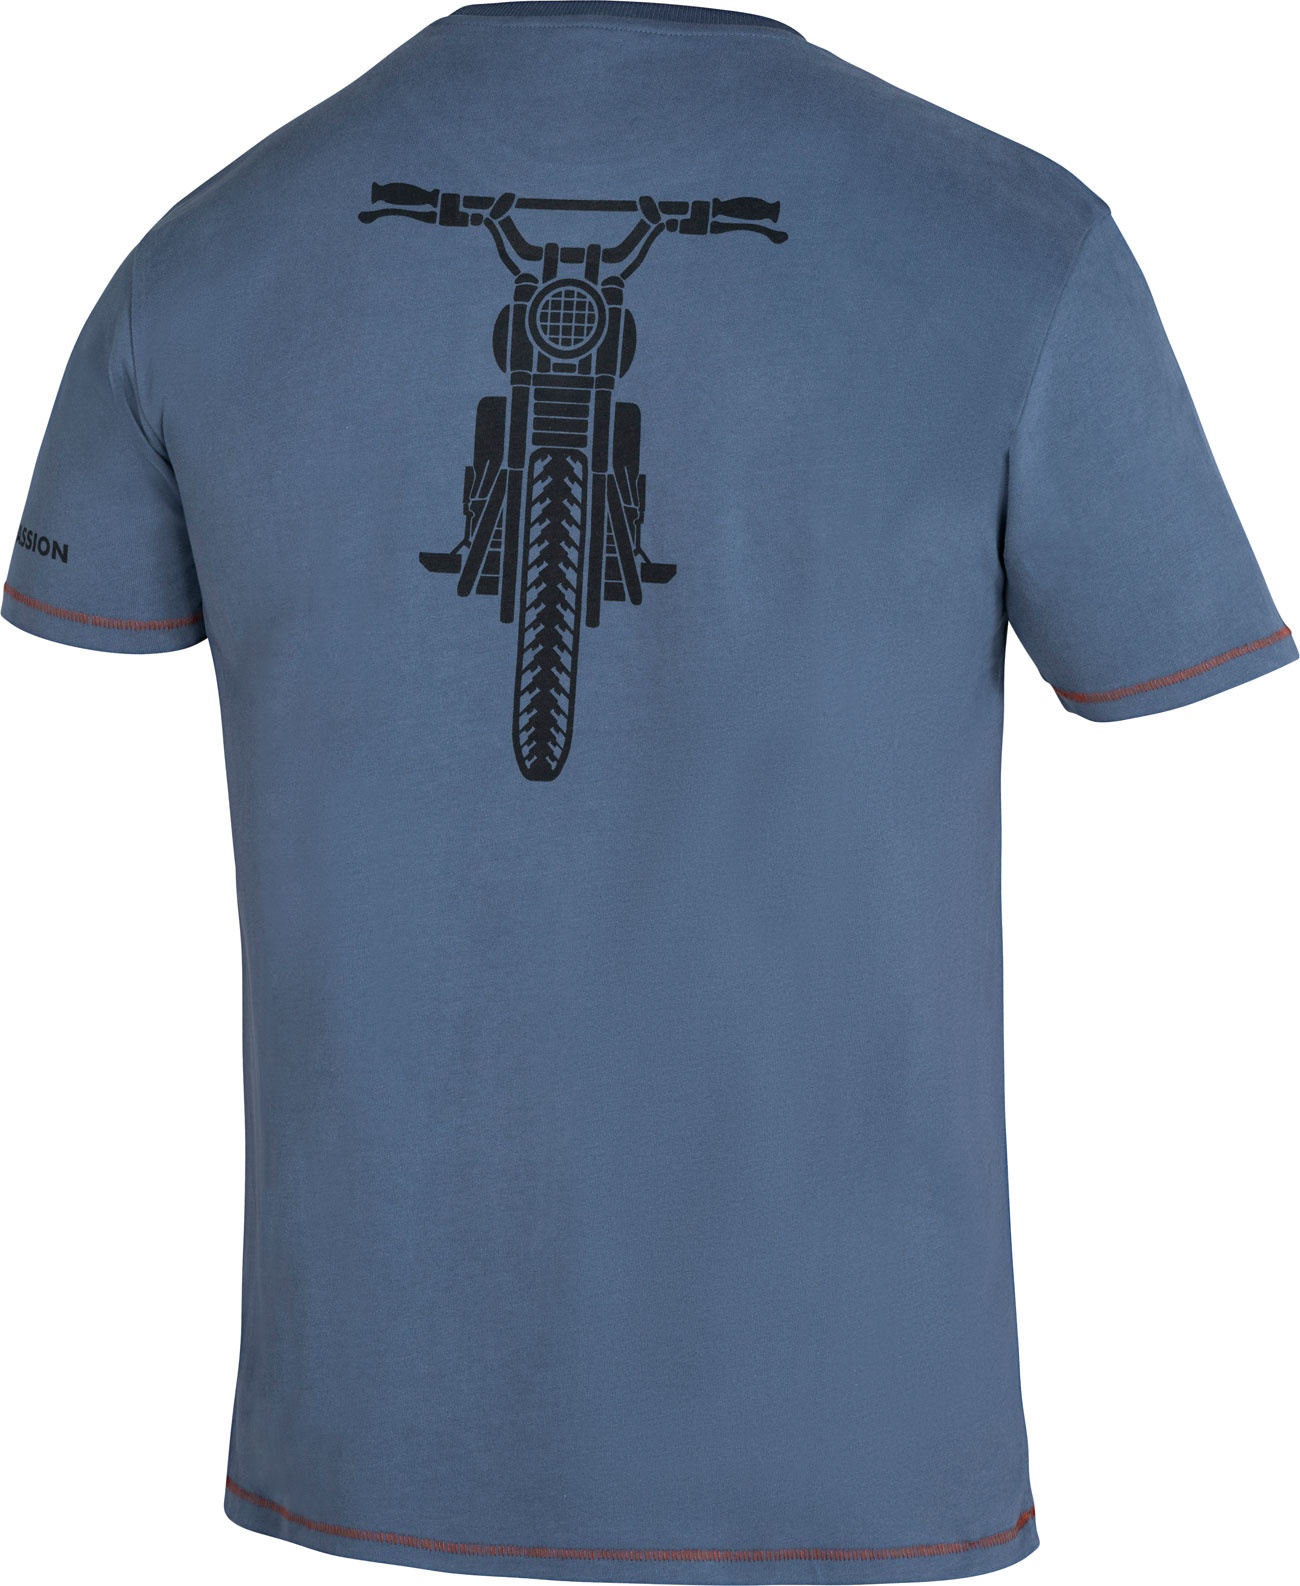 IXS Motorcycle Passion, t-shirt - Bleu Clair - S